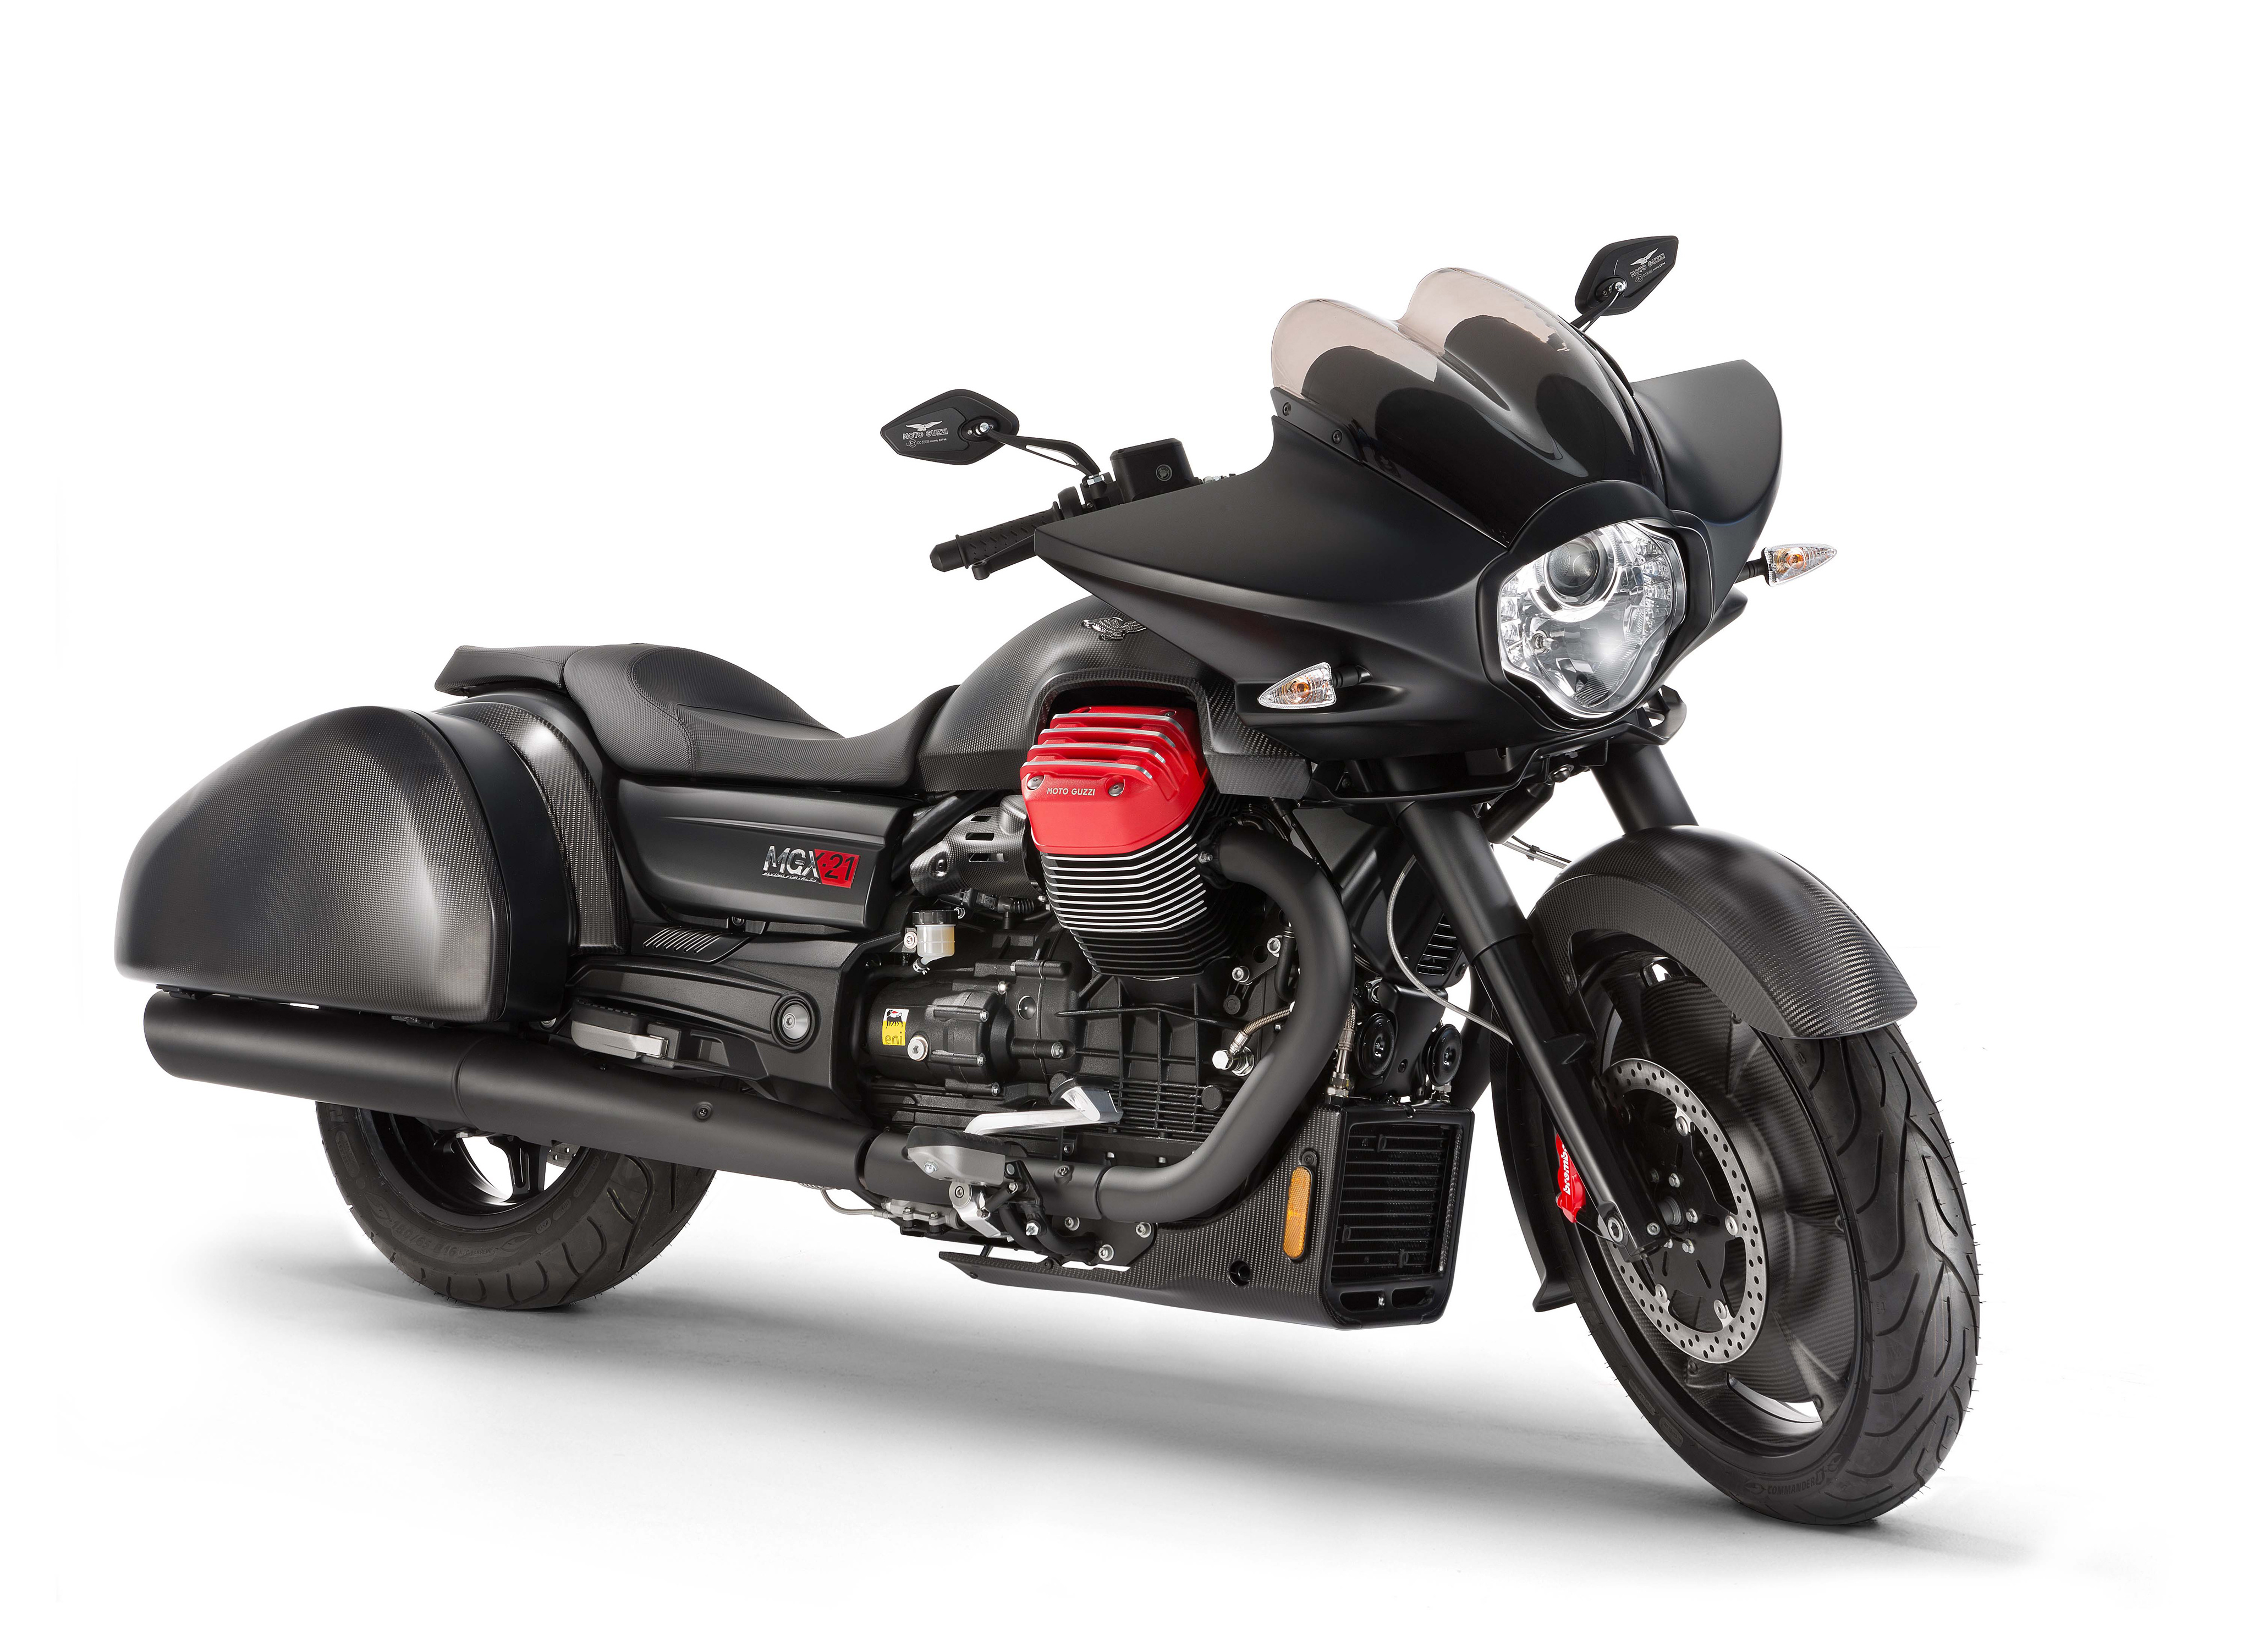 Skrivebordsbakgrunn 2015-21 Moto Guzzi MGX-21 Flying Fortress Svart Motorsykler Hvit bakgrunn 4096x3004 motorsykkel